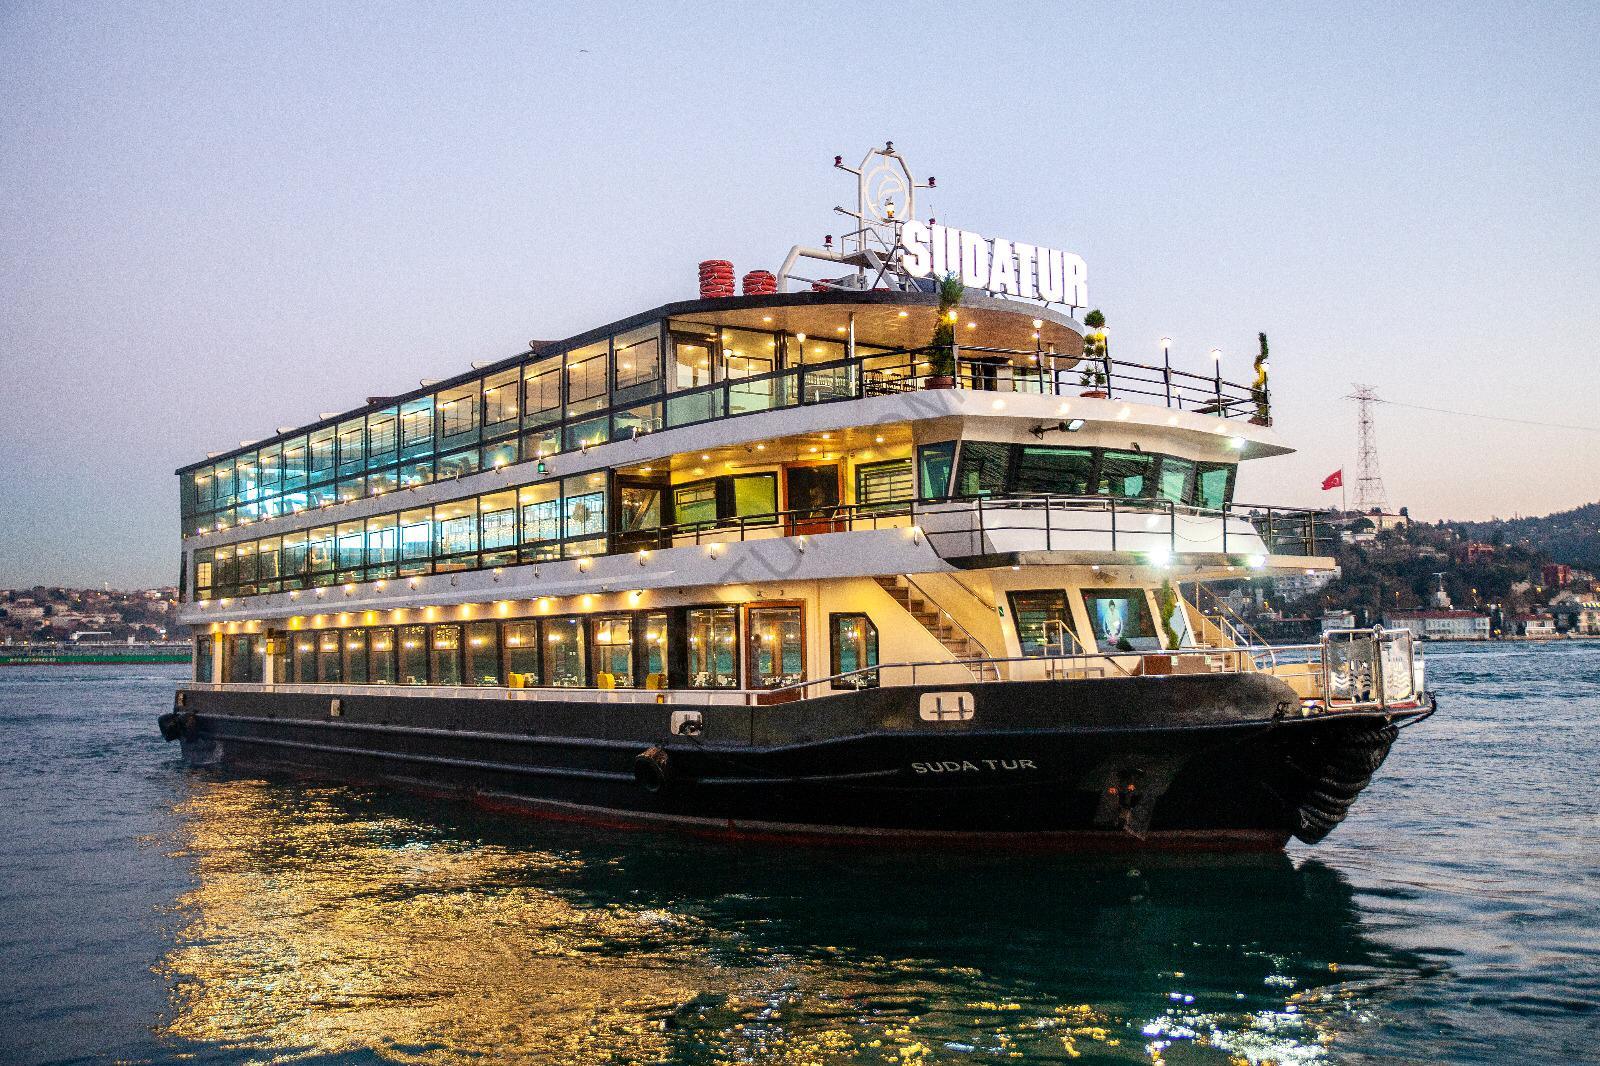 کشتی تفریحی استانبول